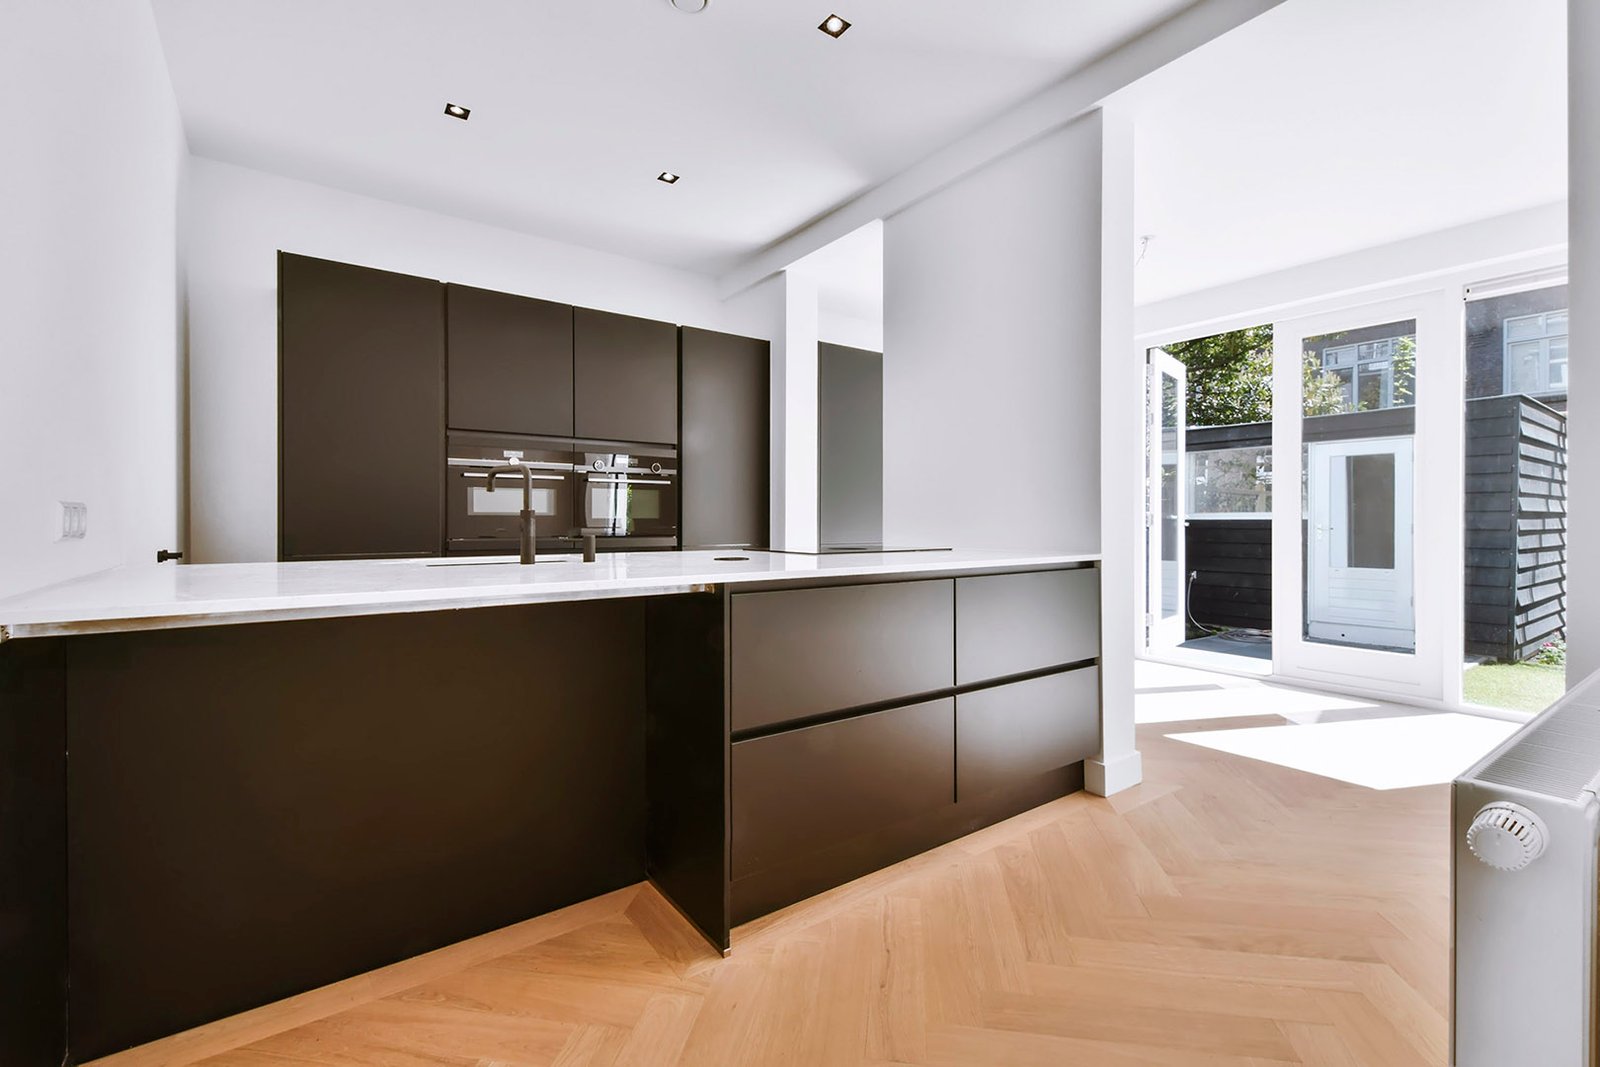 stylish-kitchen-in-daylight-with-a-black-kitchen-s-2022-03-03-00-14-44-utc.jpg